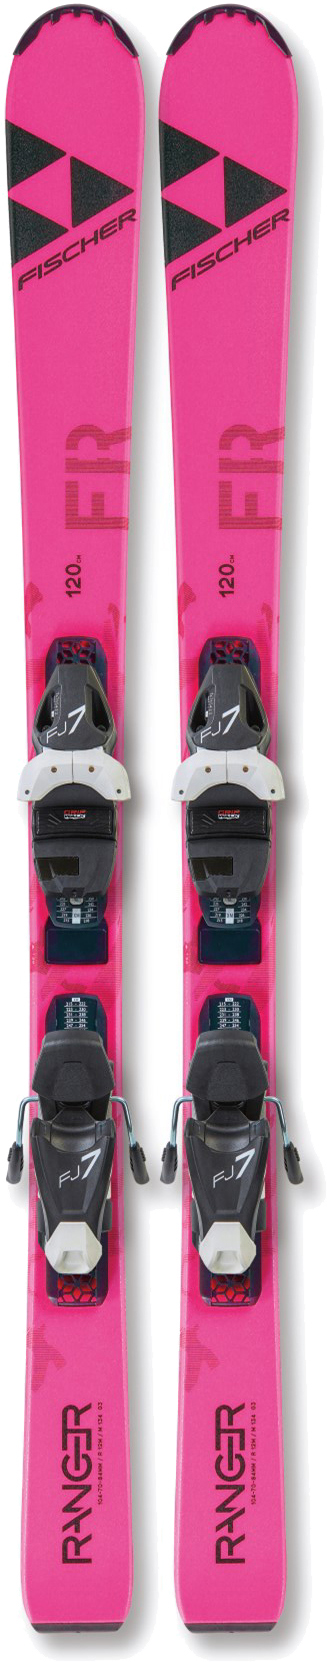 Лыжи с камбером Fischer Ranger Fr Jr Slr Pro 110 см